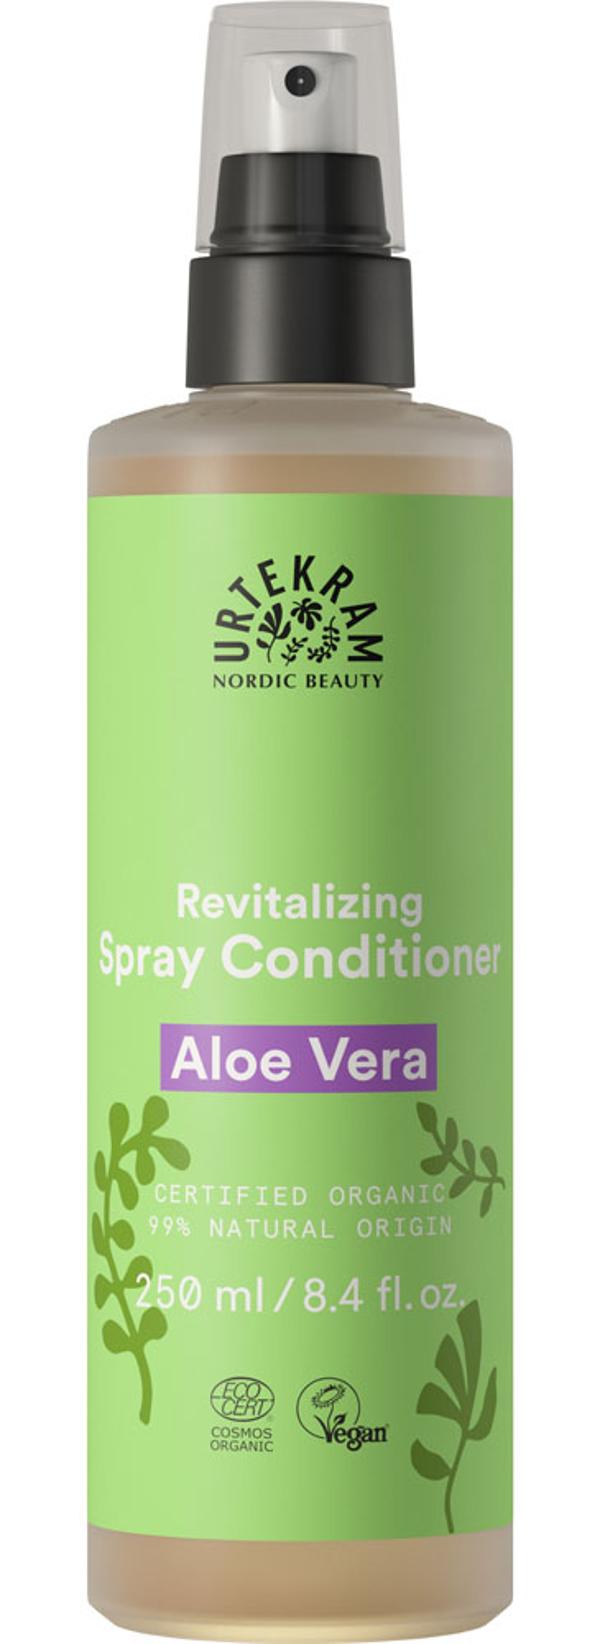 Produktfoto zu Urtekram Aloe Vera Spray Conditioner 250ml